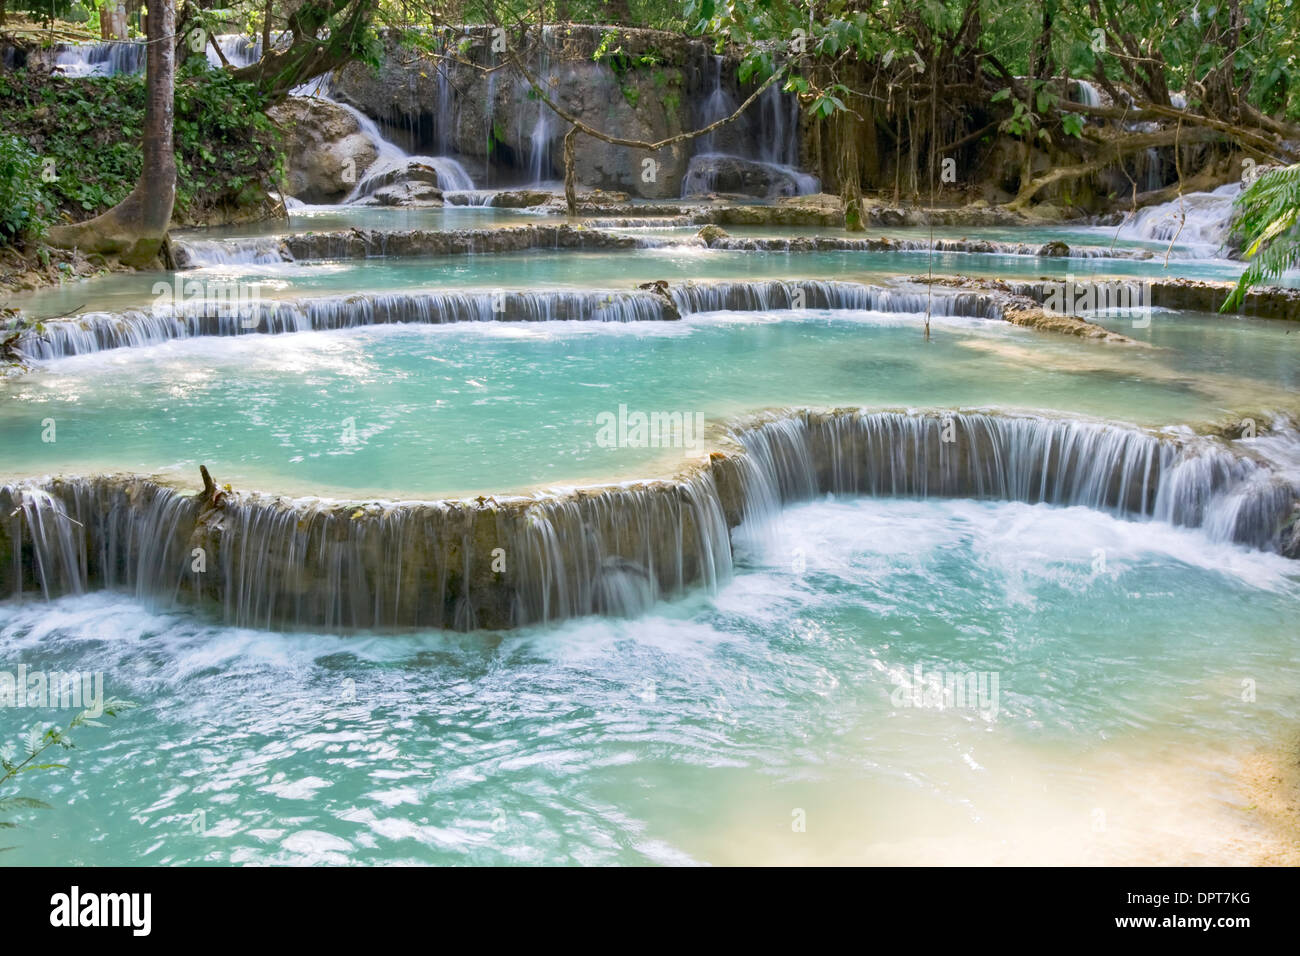 Pool and waterfall in the Tat Kuang Si waterfall system near Luang Prabang in Laos Stock Photo